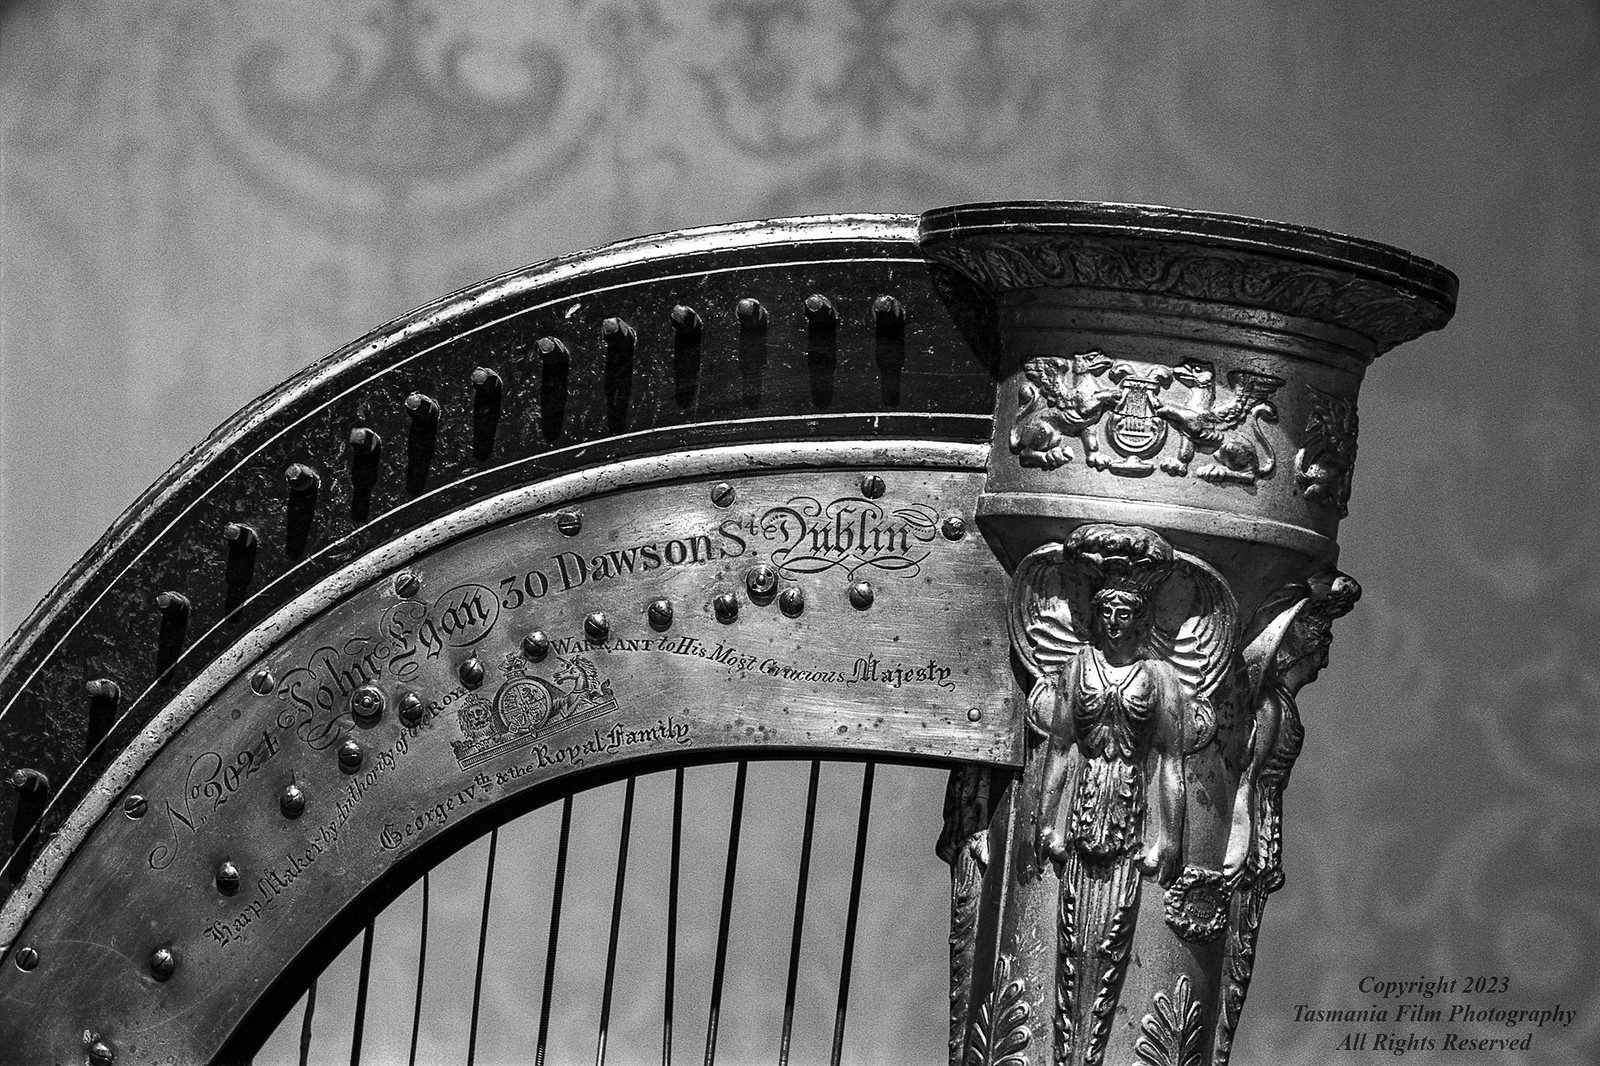 @TassieFilm#ilfordphoto #shotwithpanf Camera: 1952 Leica IIIf Lens: 1958 Leitz 13.5cm Hektor Film: bulk loaded 135 Pan F+; Exposure: One of several Bulb Exposures between 2-4 minutes @ f/11. Development: ID-11 1+3 20C/17.5m 1825 harp by John Egan, Dublin, Ireland